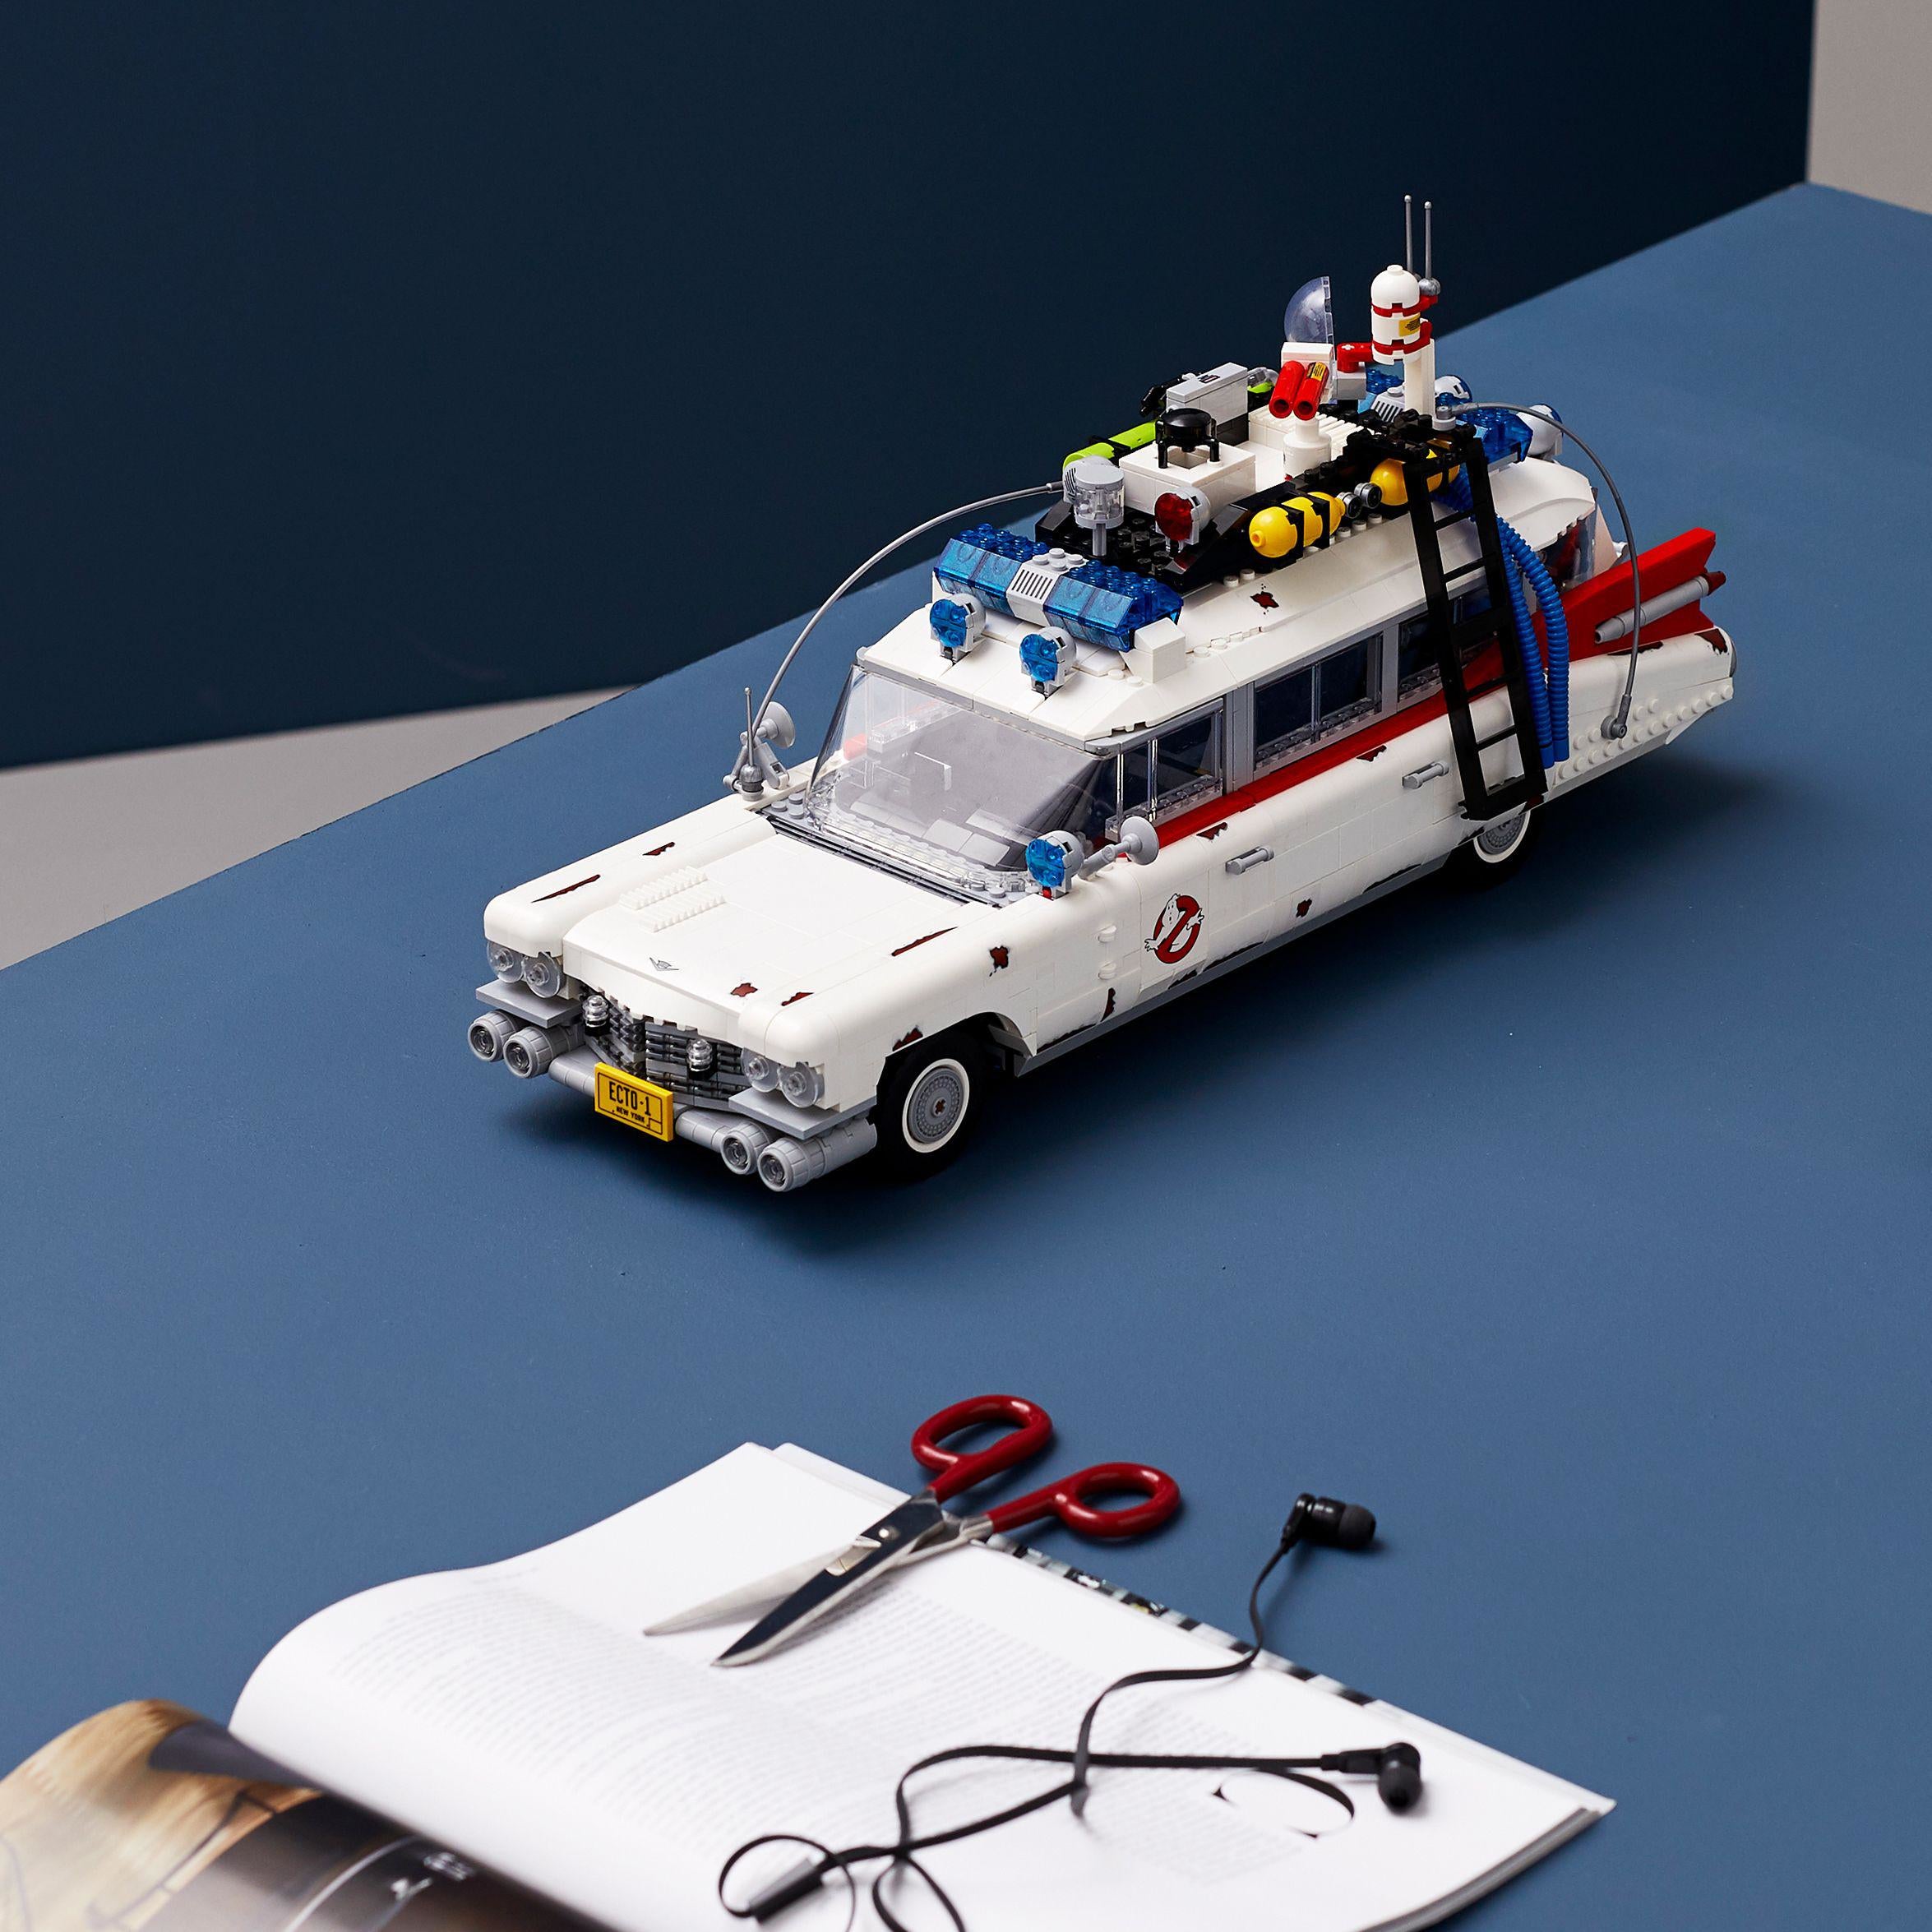 10274 LEGO® Ideas - ECTO-1 Ghostbusters